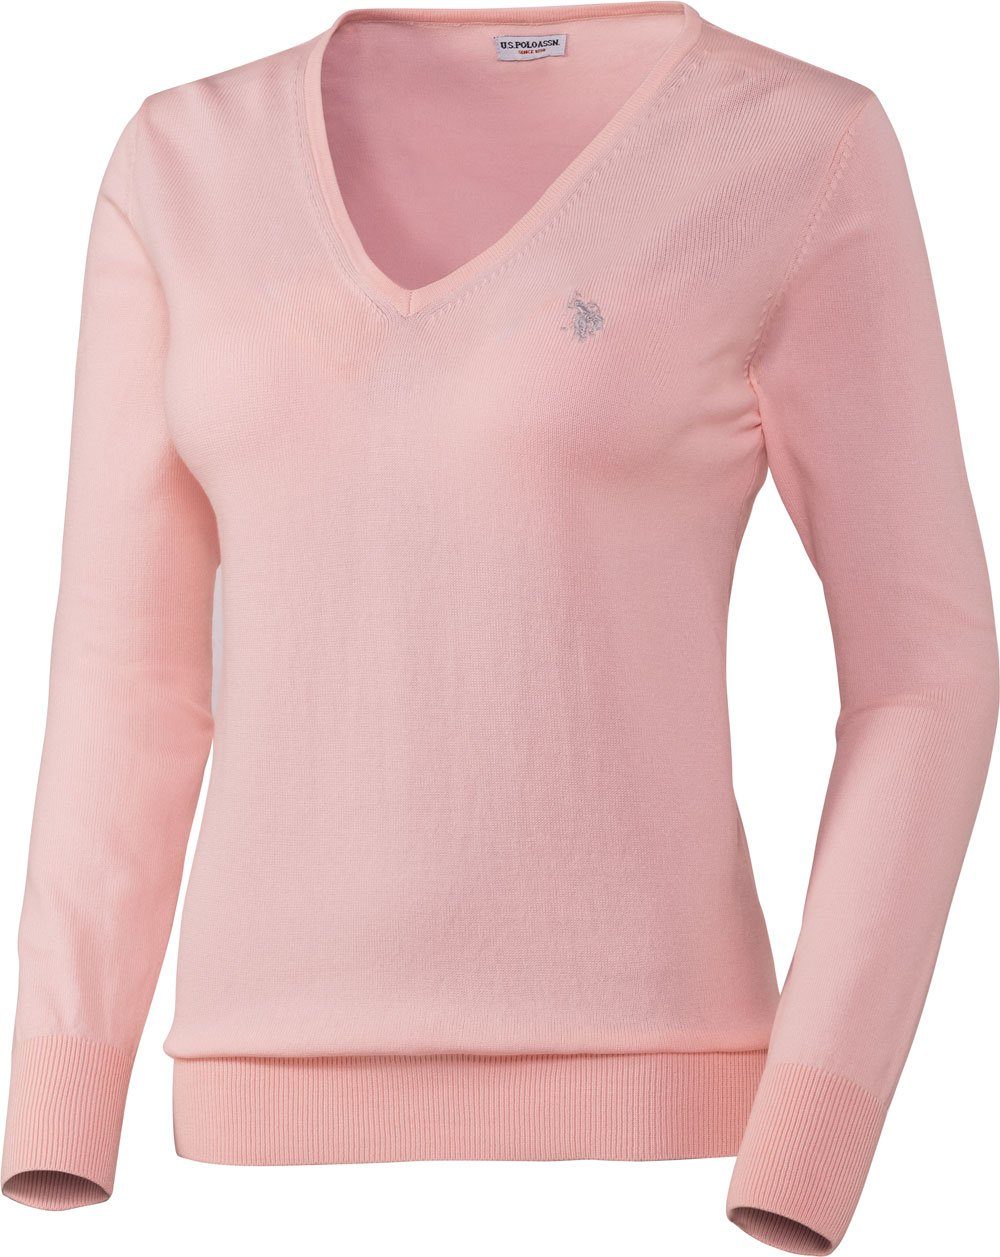 U.S. Polo Assn V-Ausschnitt-Pullover aus weichem Baumwollmix-Strick und leicht tailliert rosa